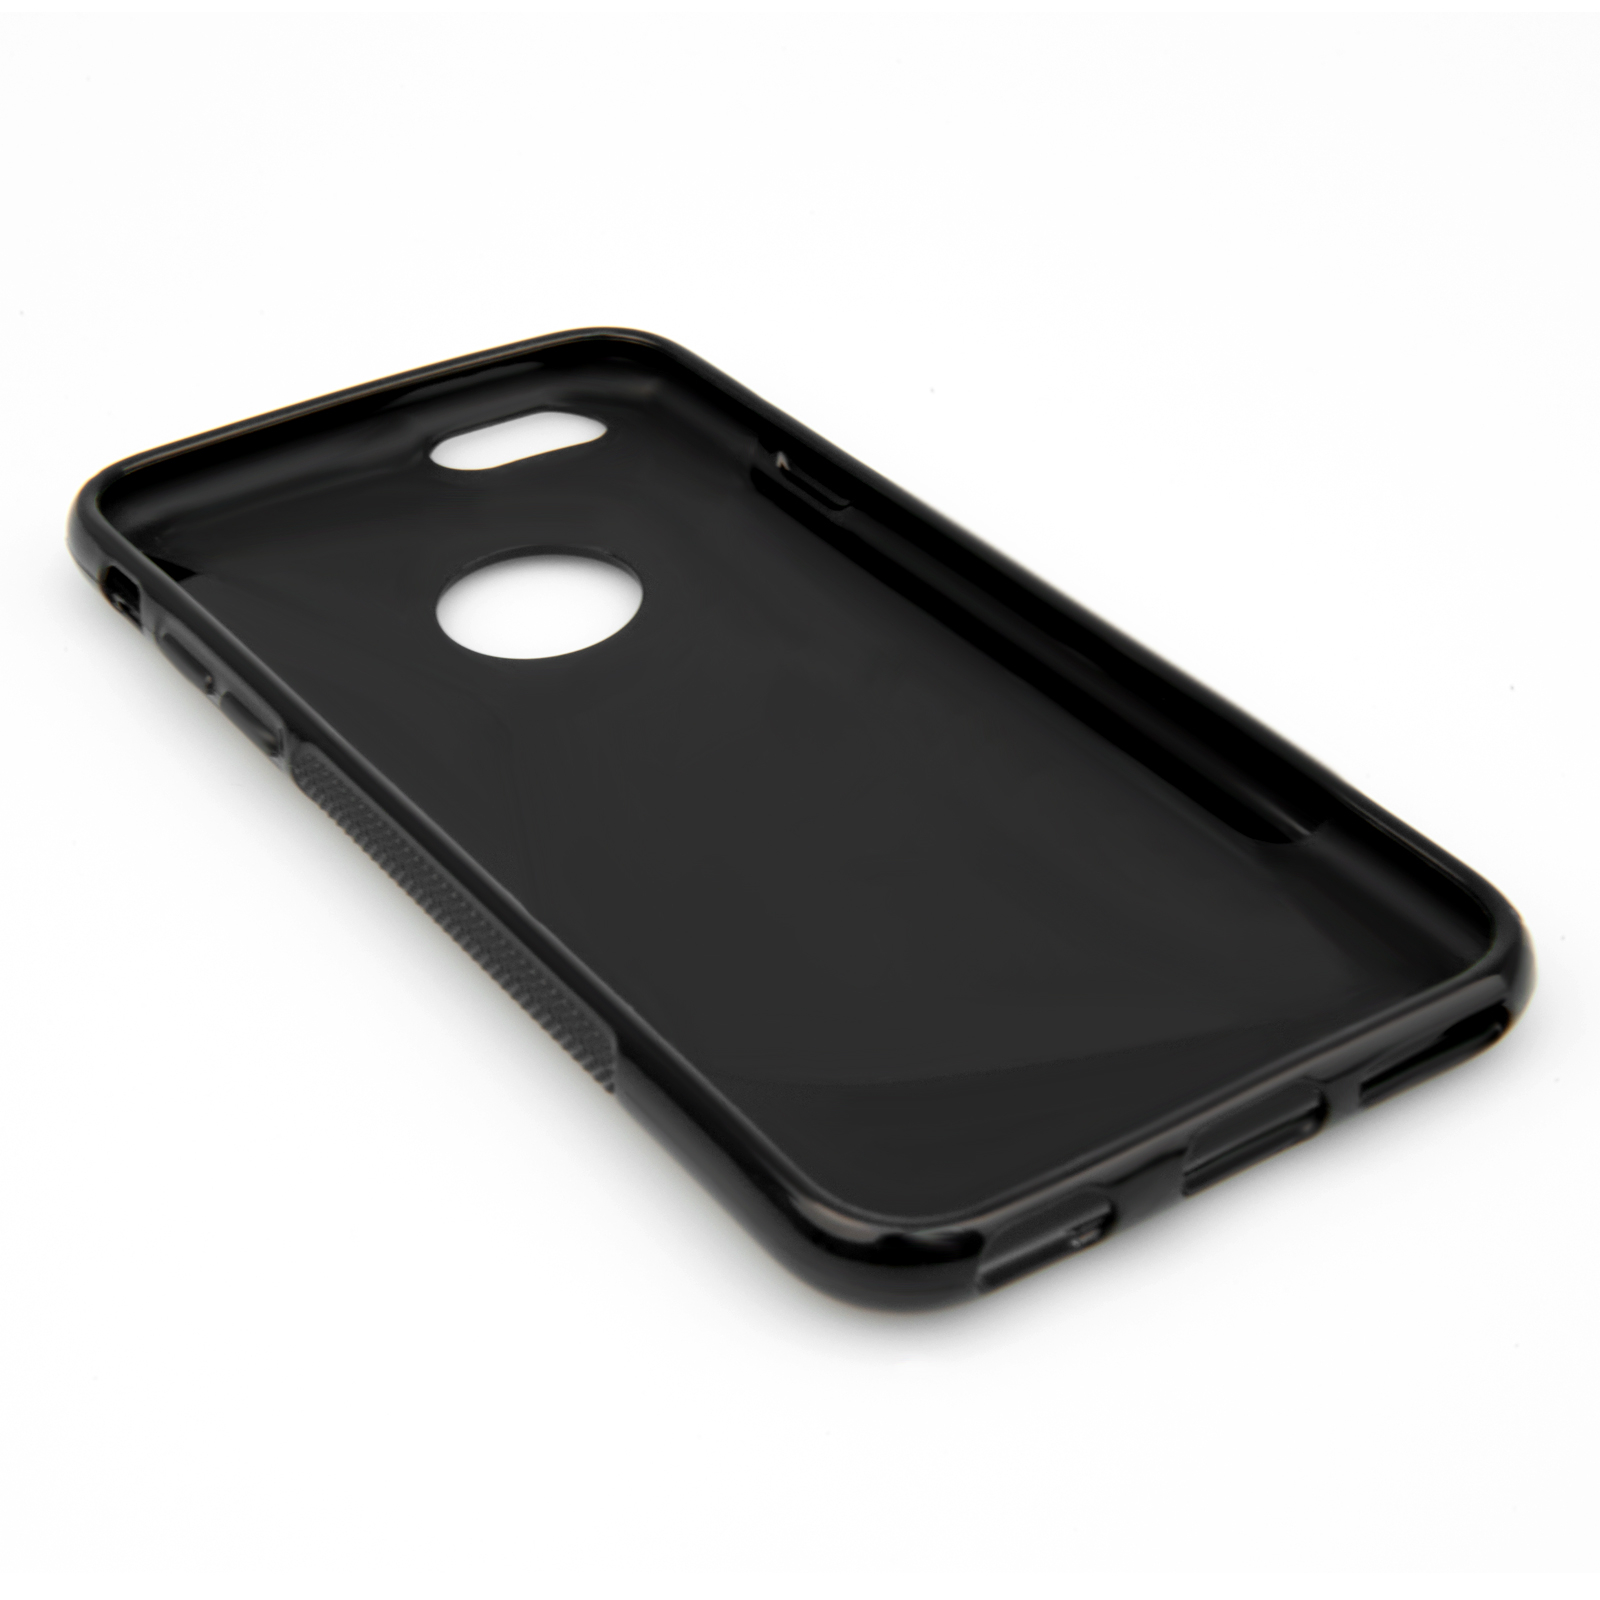 Caseflex iPhone 6 and 6s Silicone Gel S-Line Case - Black